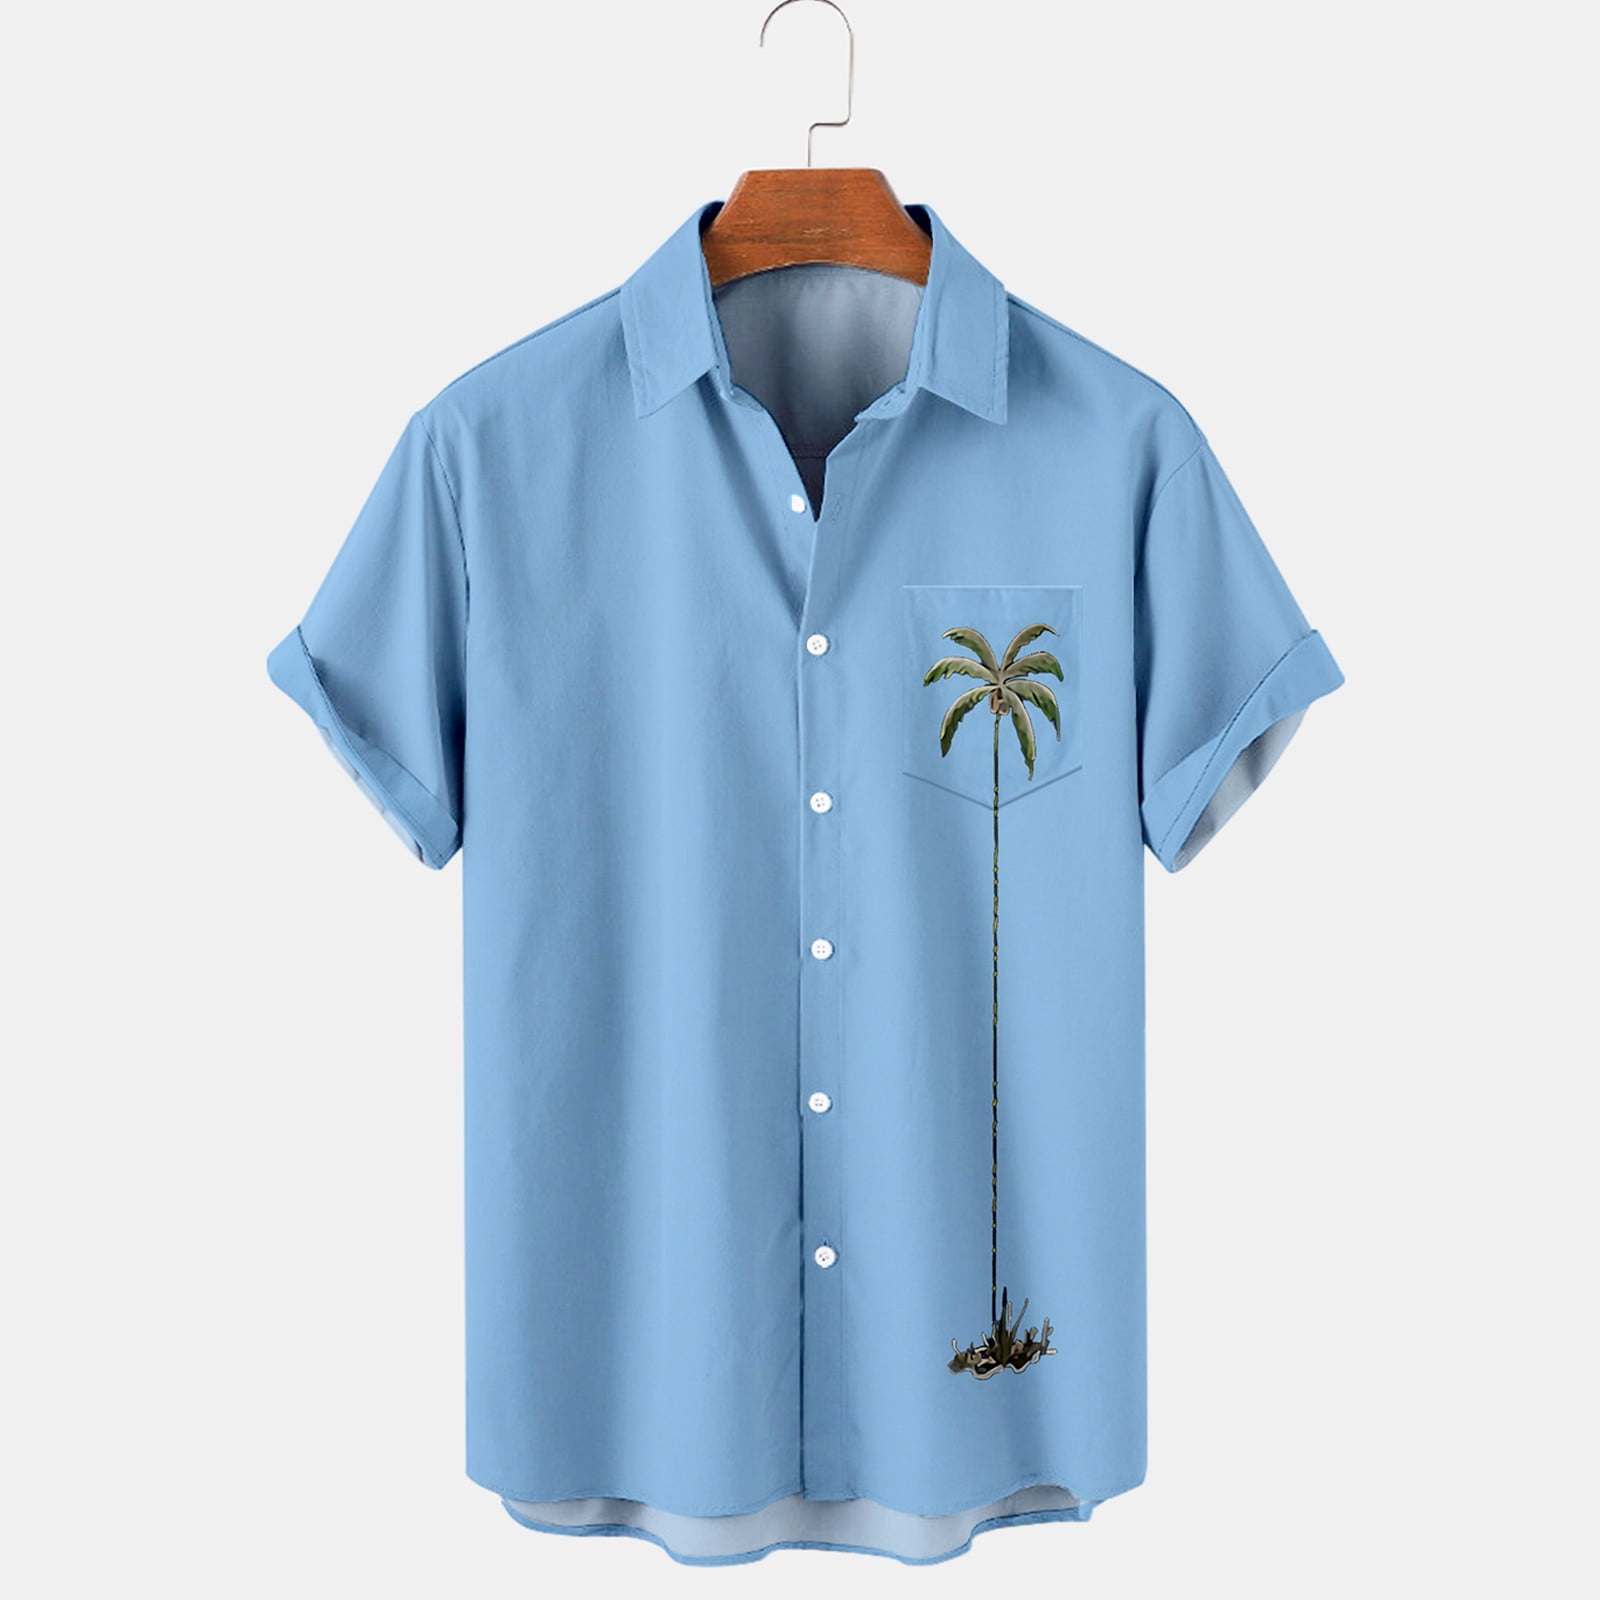 Men's Vintage Hawaiian Shirts Lapel Button Up Shirt Short Sleeve